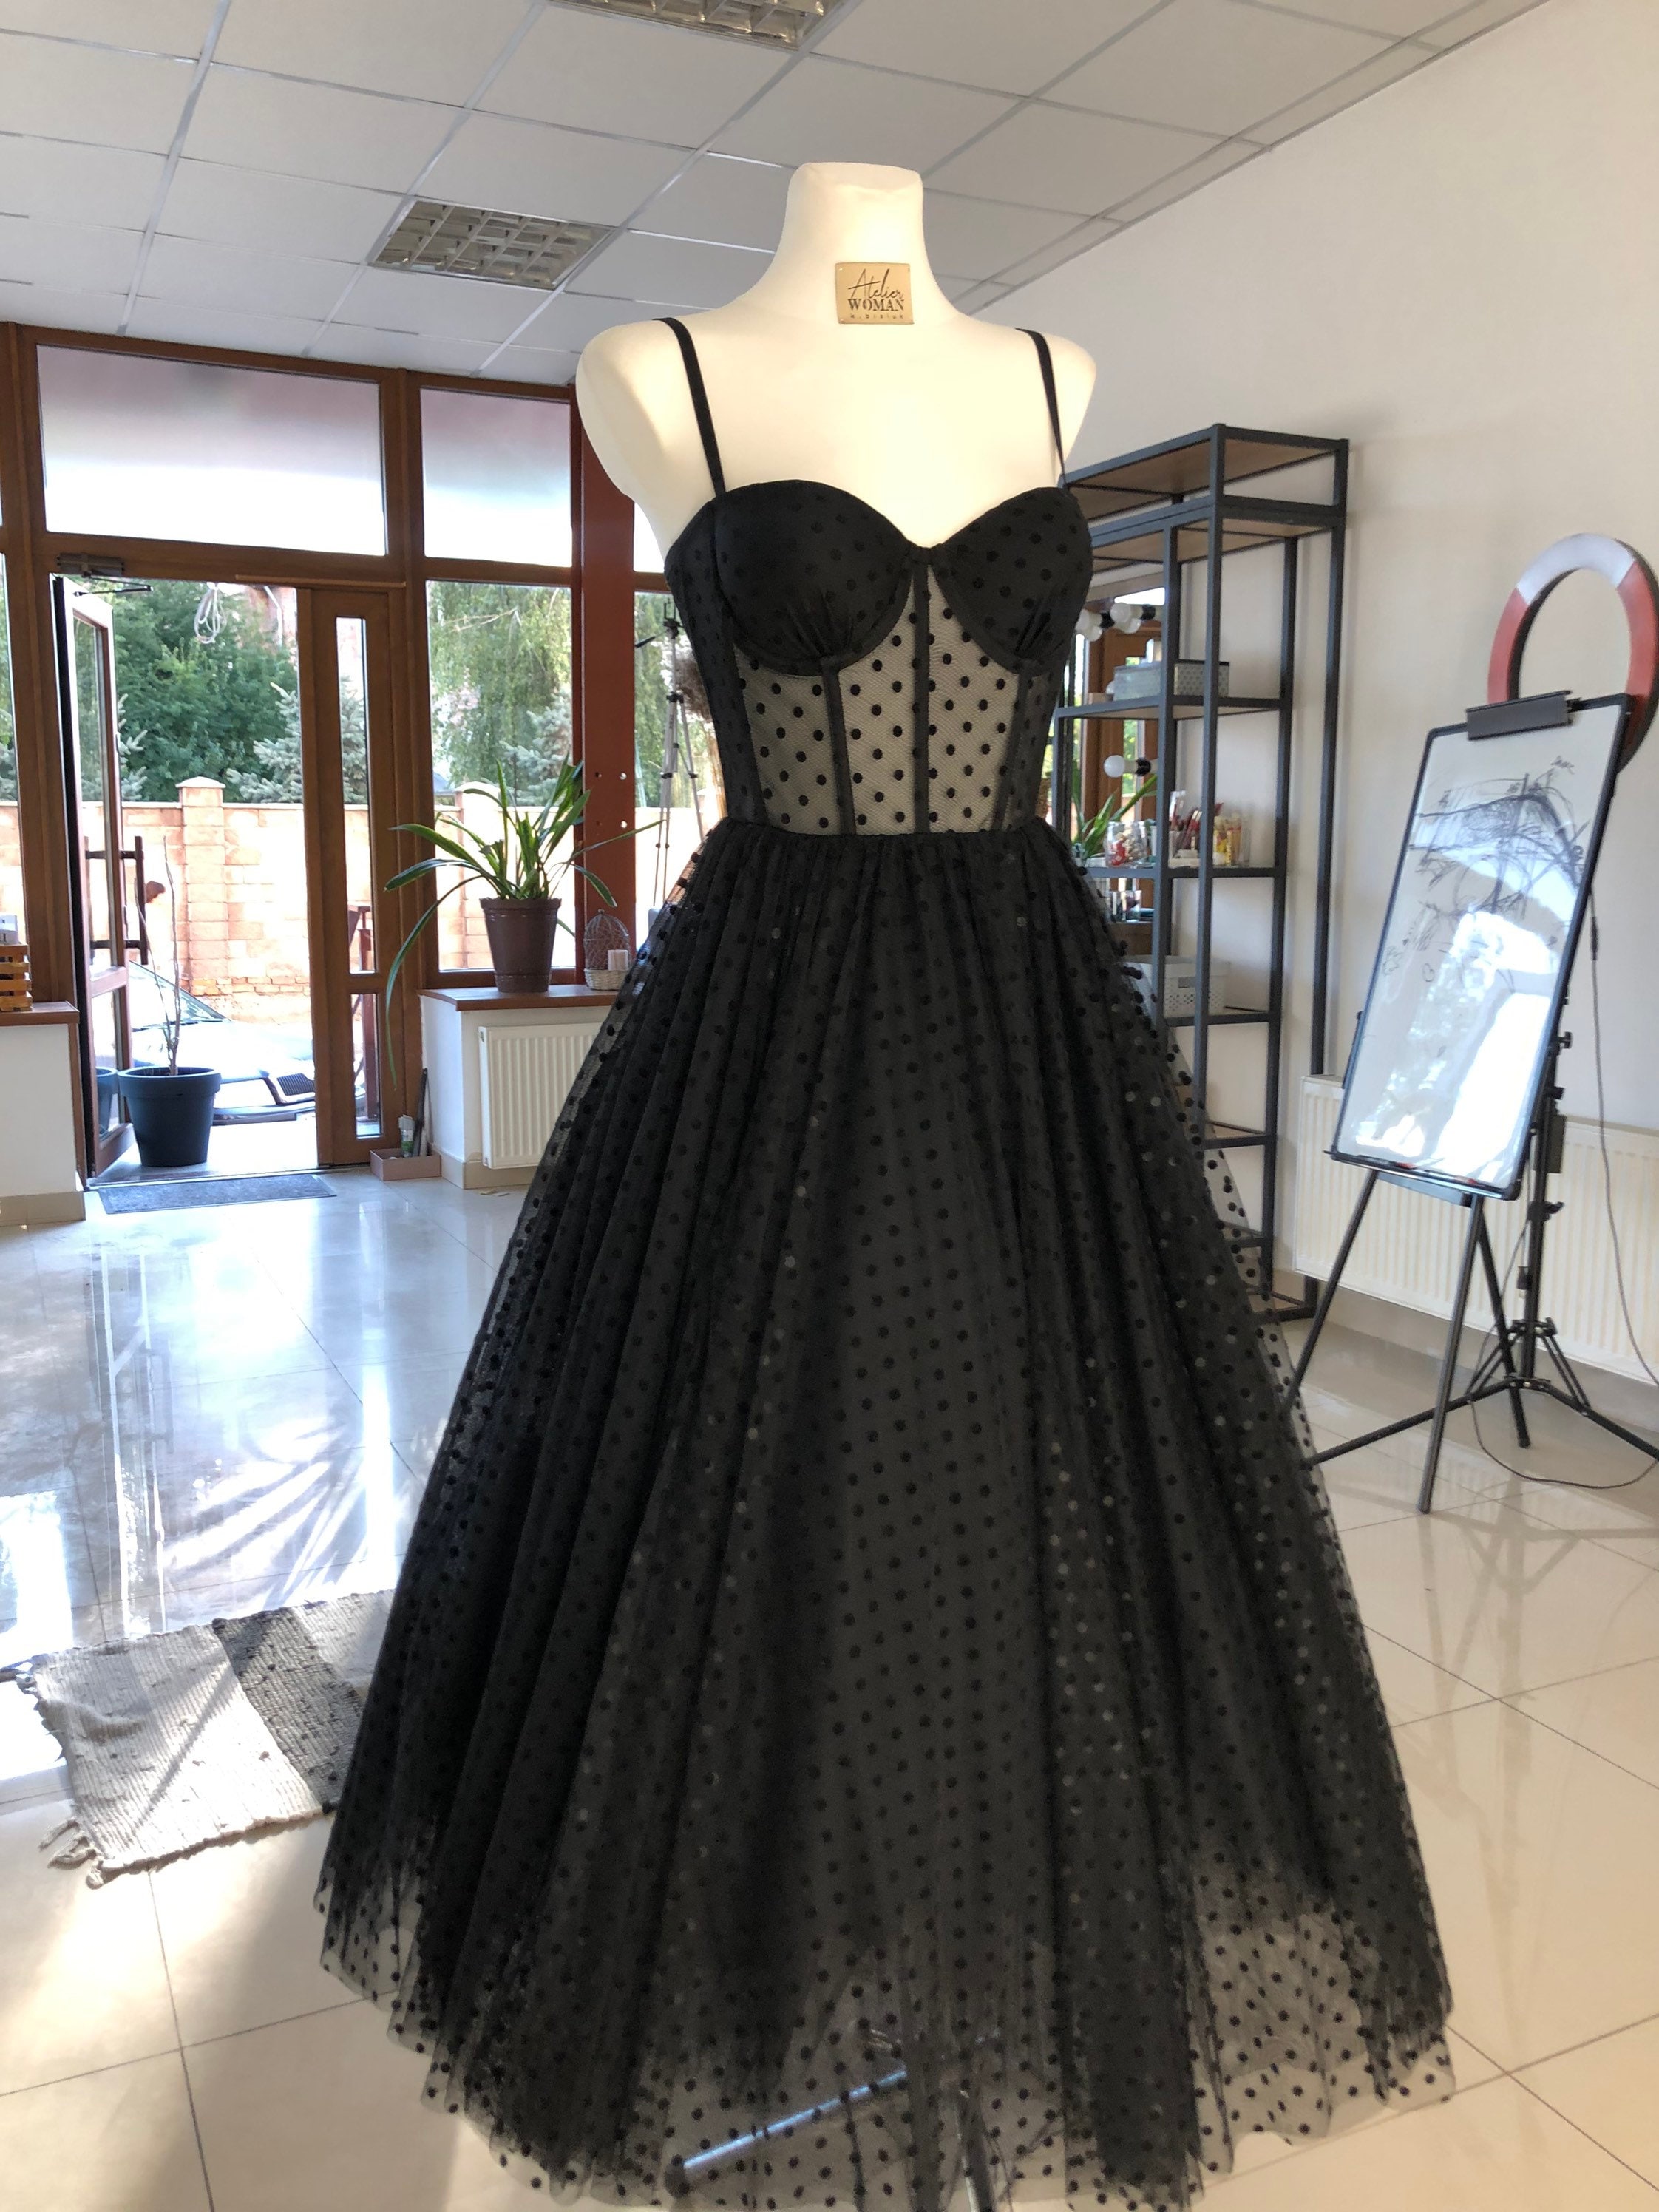 Halloween Black Corset Prom Dress in Small Dots, Black Mesh Bridal Medium  Length Gown, A-line Wedding Dress, Boho Wedding Separates 